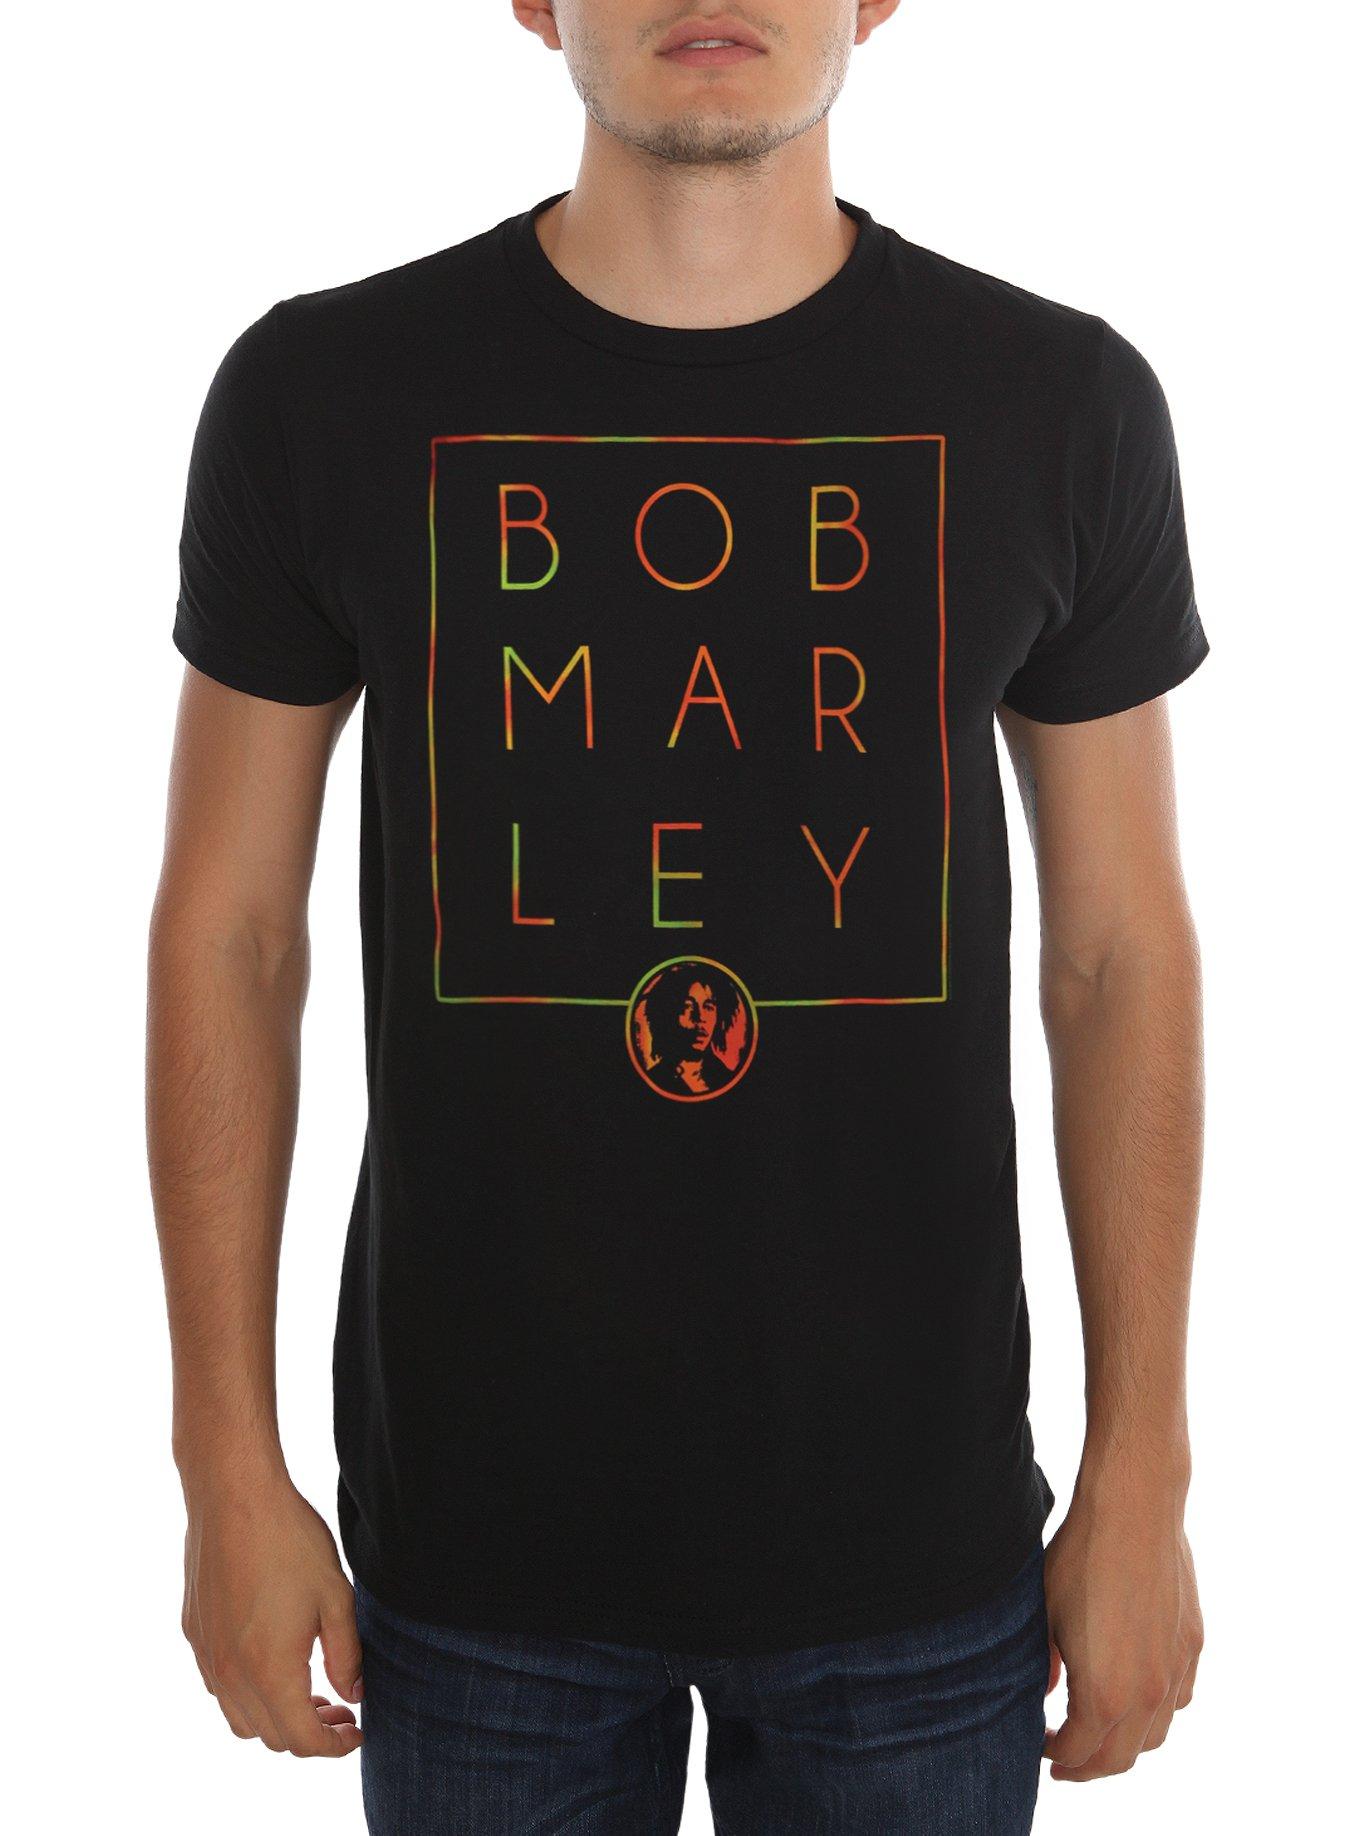 Bob Marley Rasta Box T-Shirt | Hot Topic